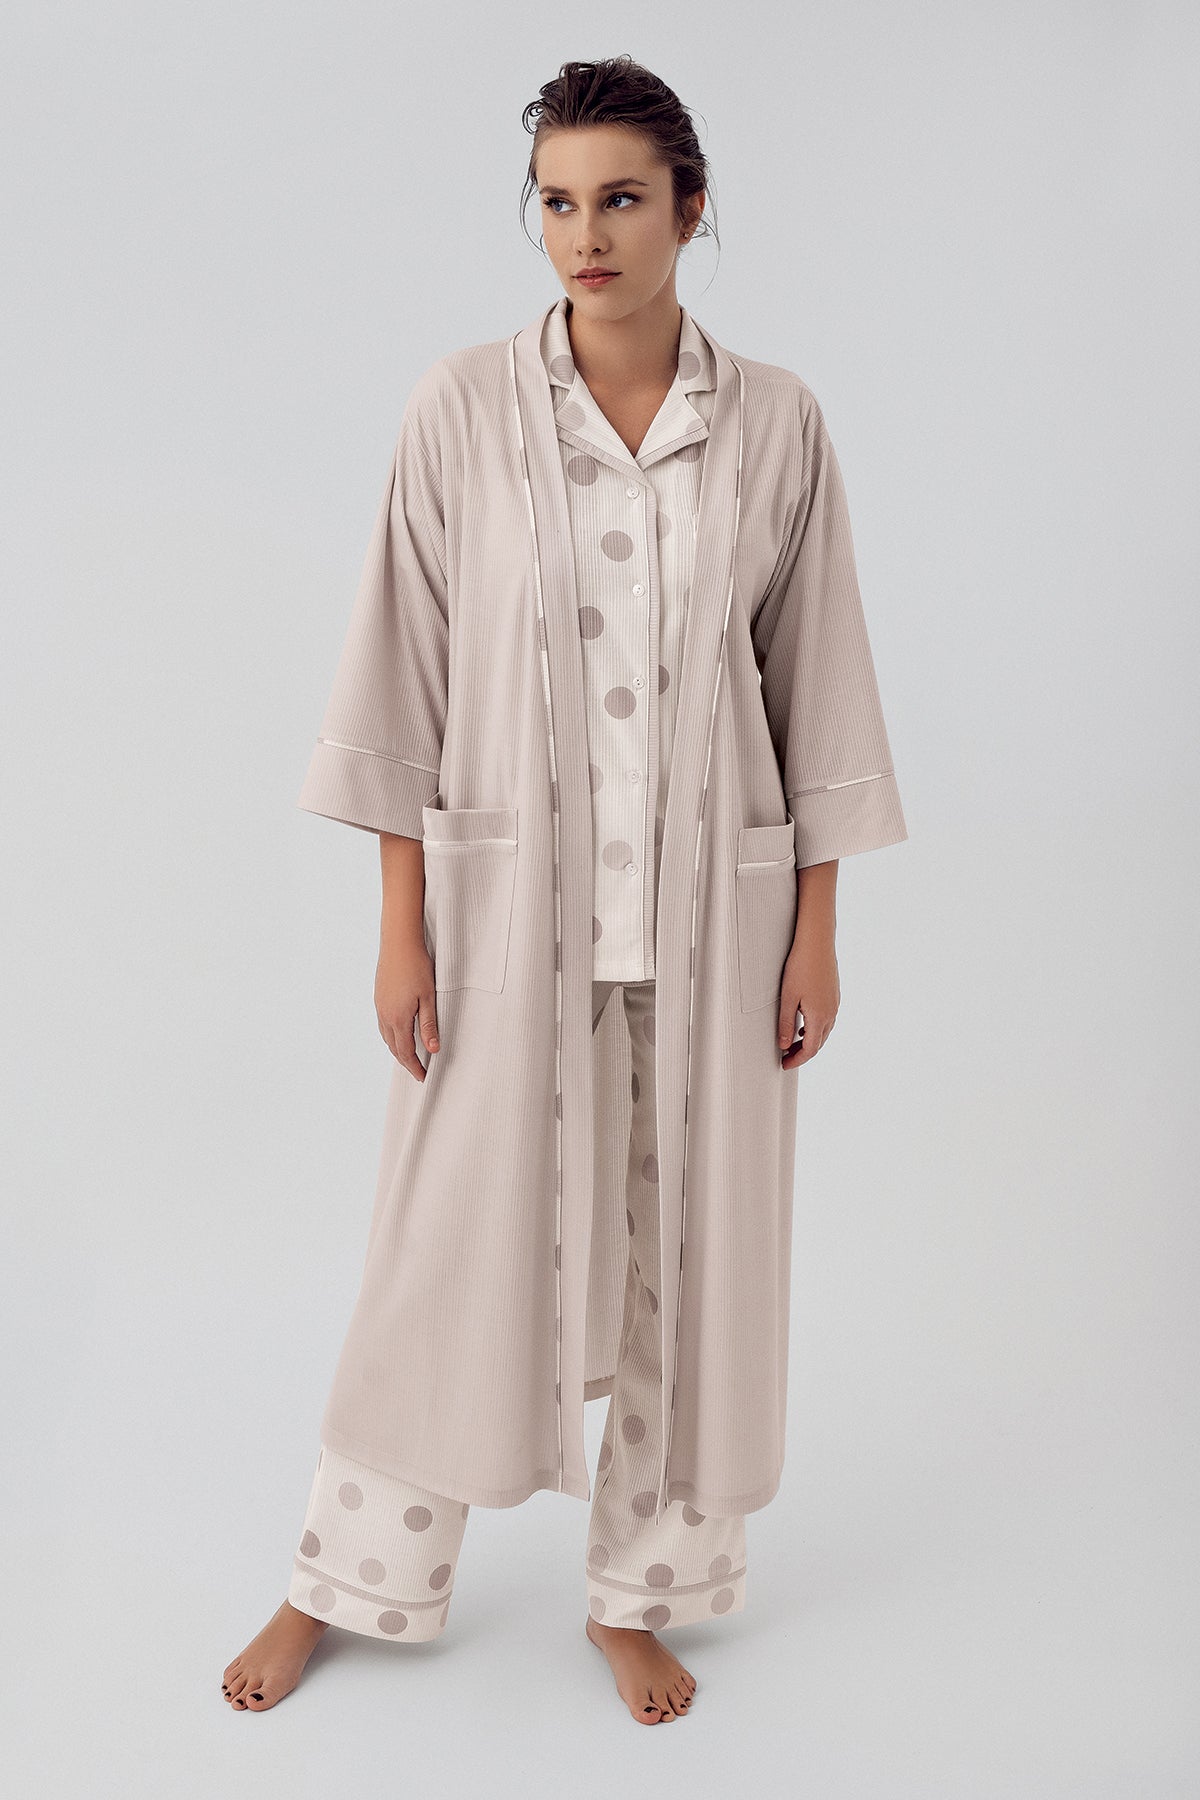 Shopymommy 16310 Polka Dot 3-Pieces Maternity & Nursing Pajamas With Robe Beige